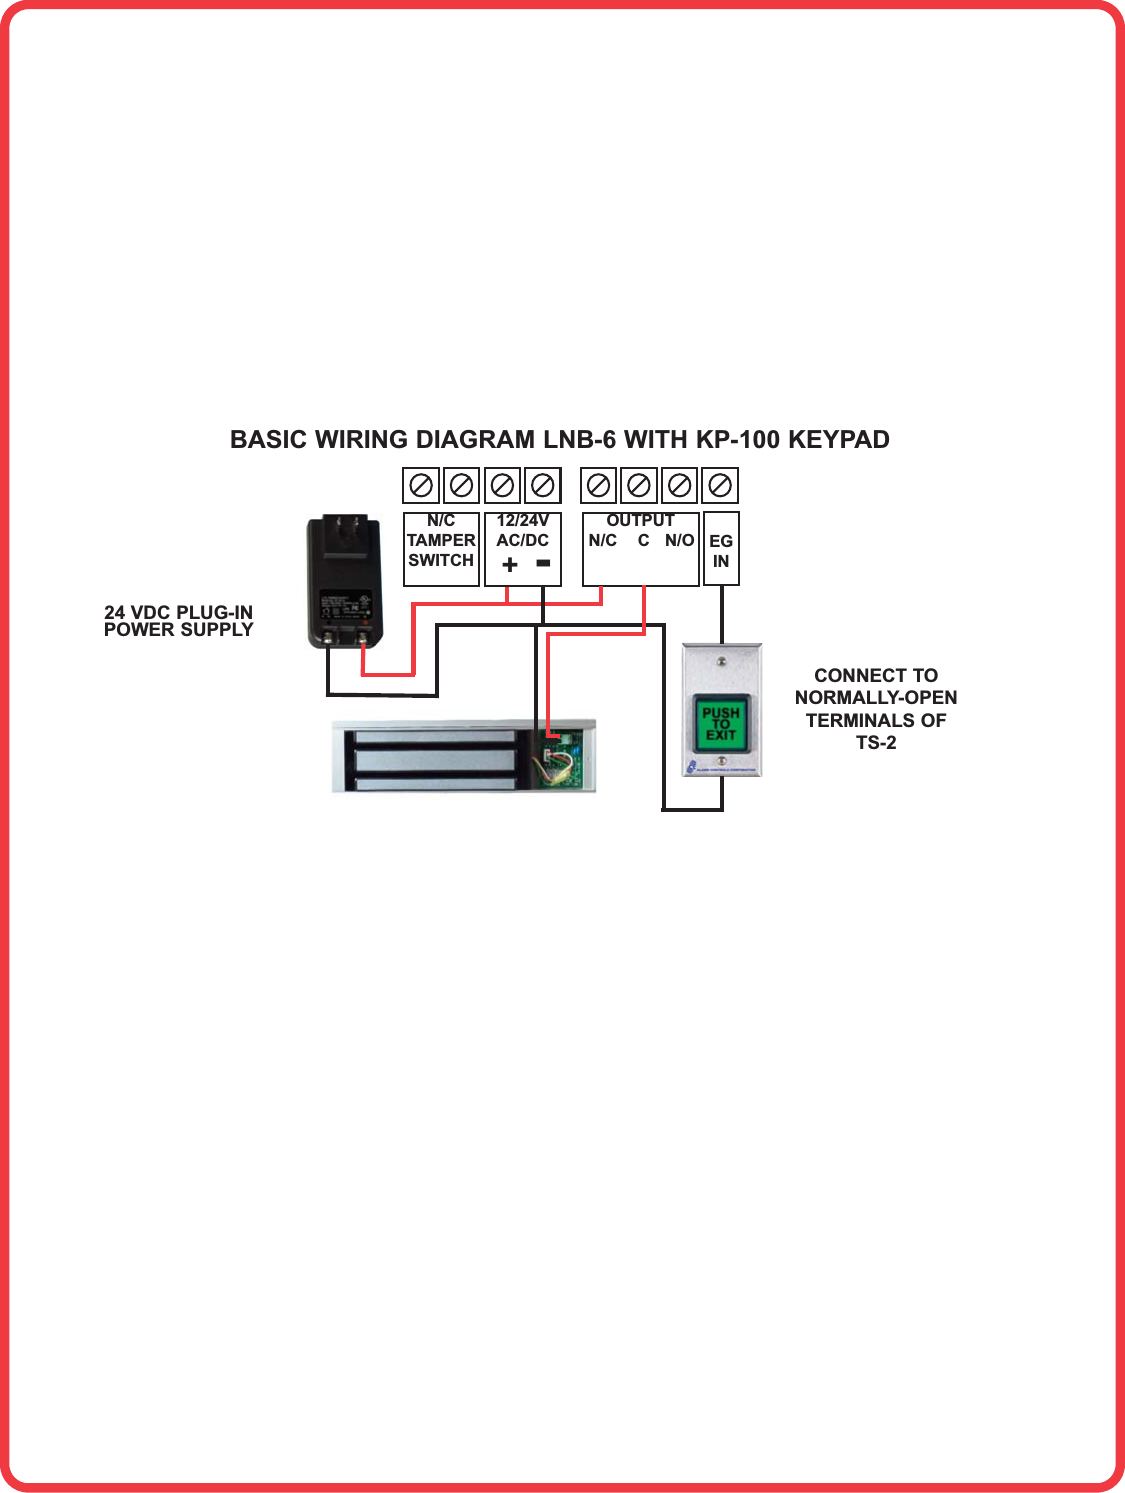 Page 1 of 1 - Alarm Controls LNB-6 Basic Wiring Diagram W KP-100 Keypad